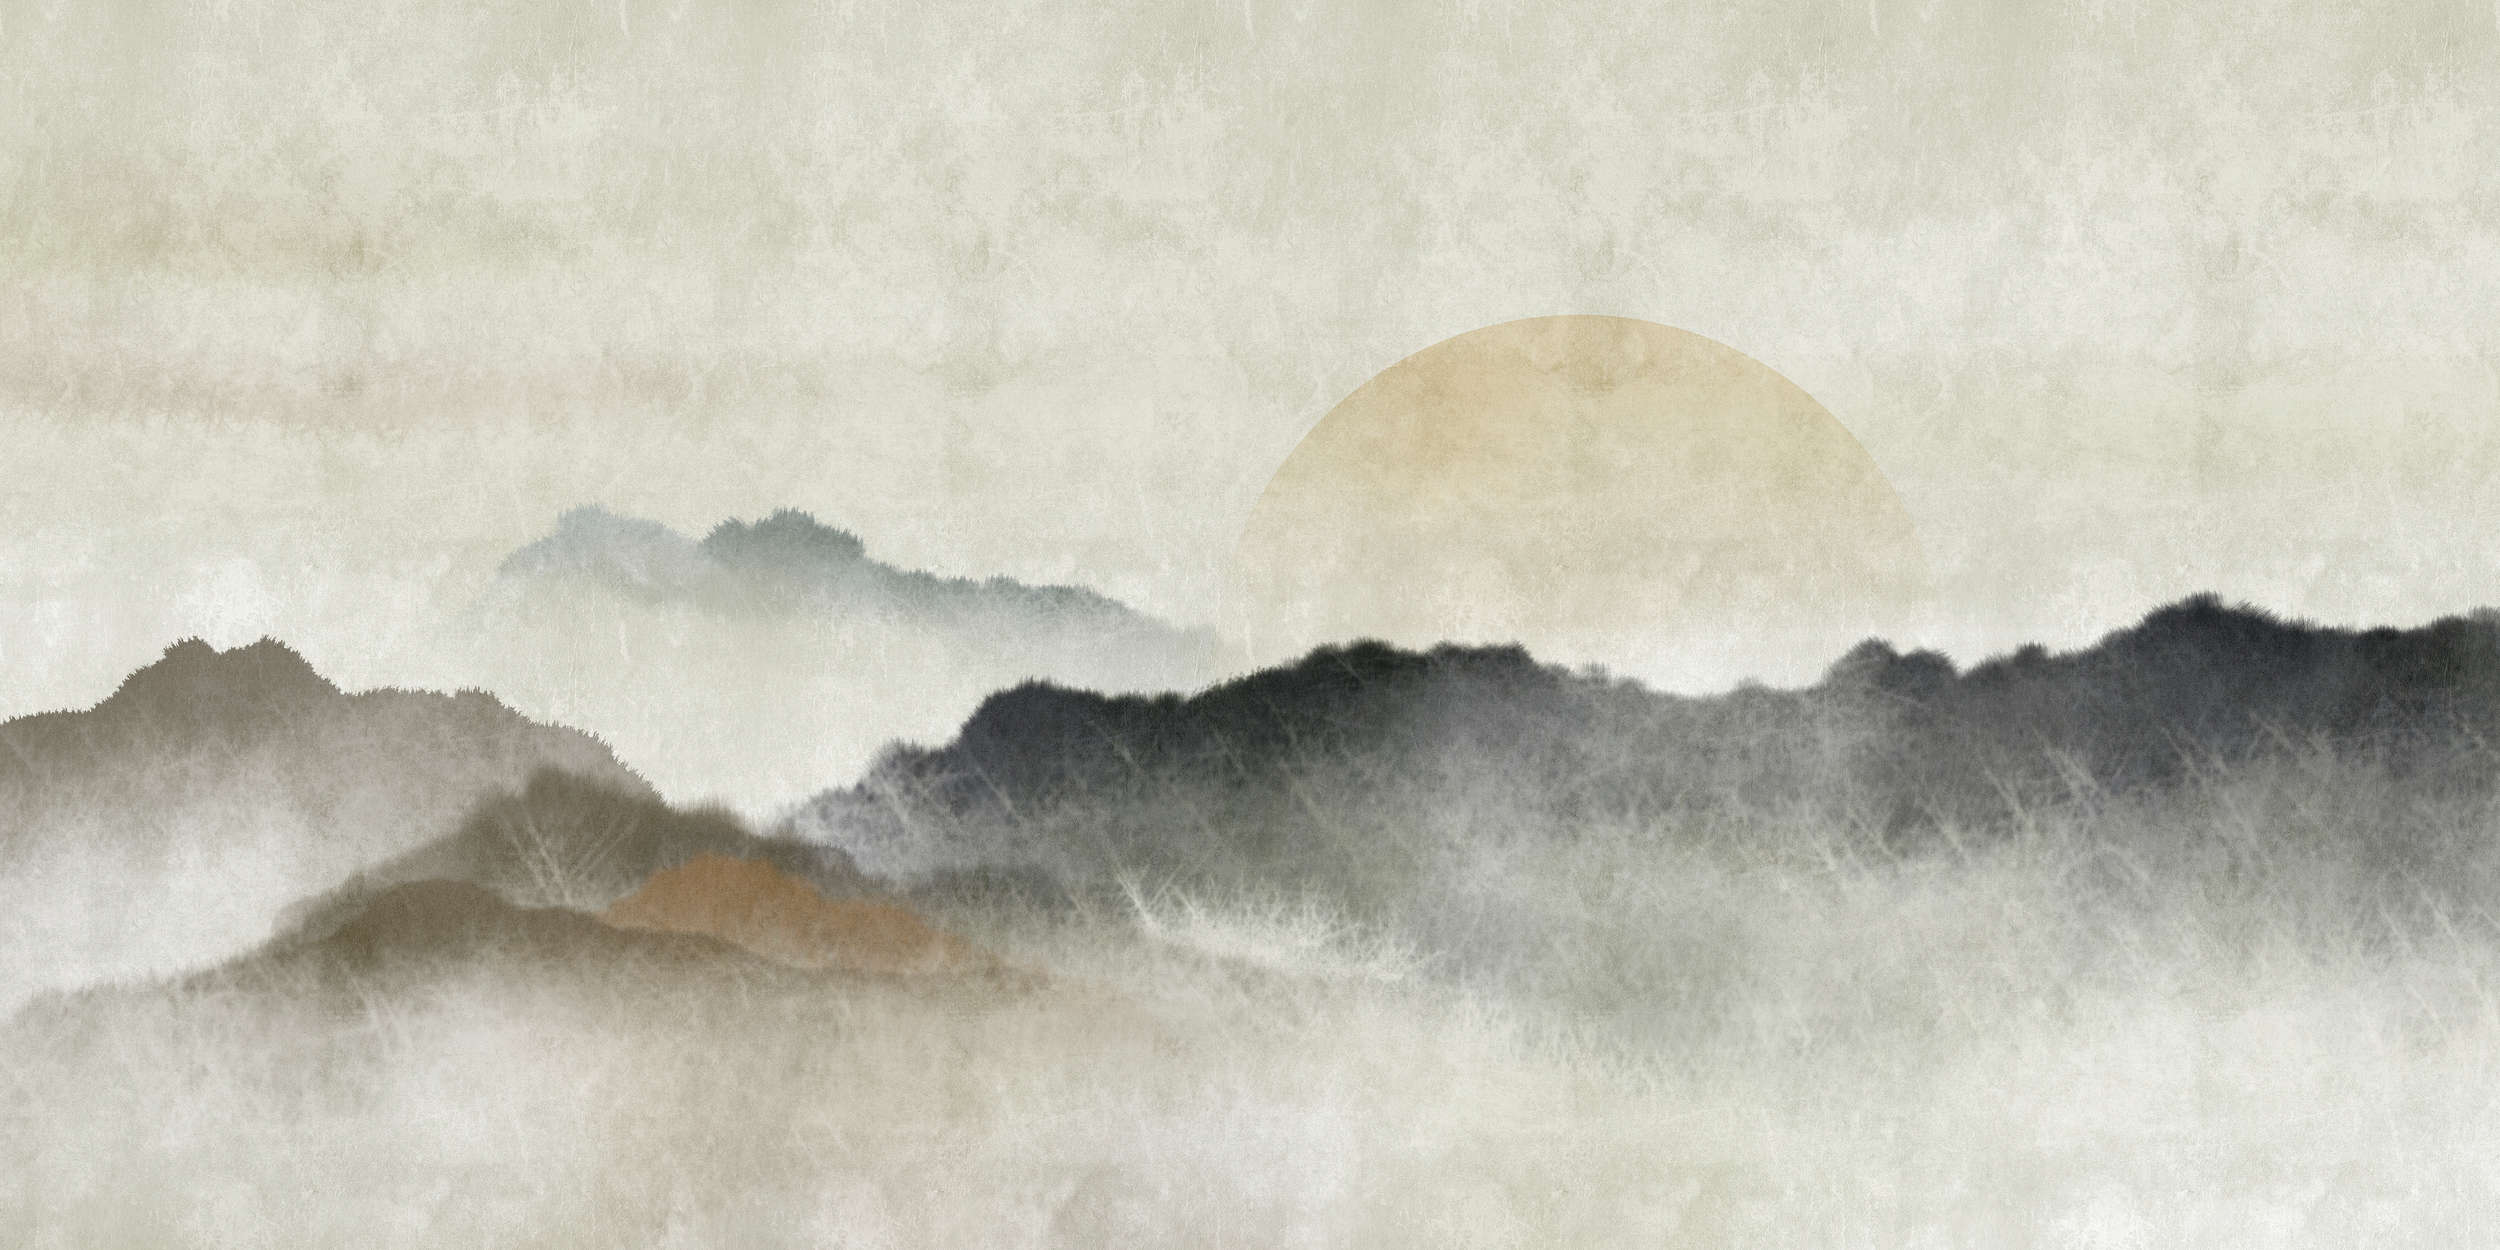             Akaishi 1 - Stampa murale asiatica Catena montuosa all'alba
        